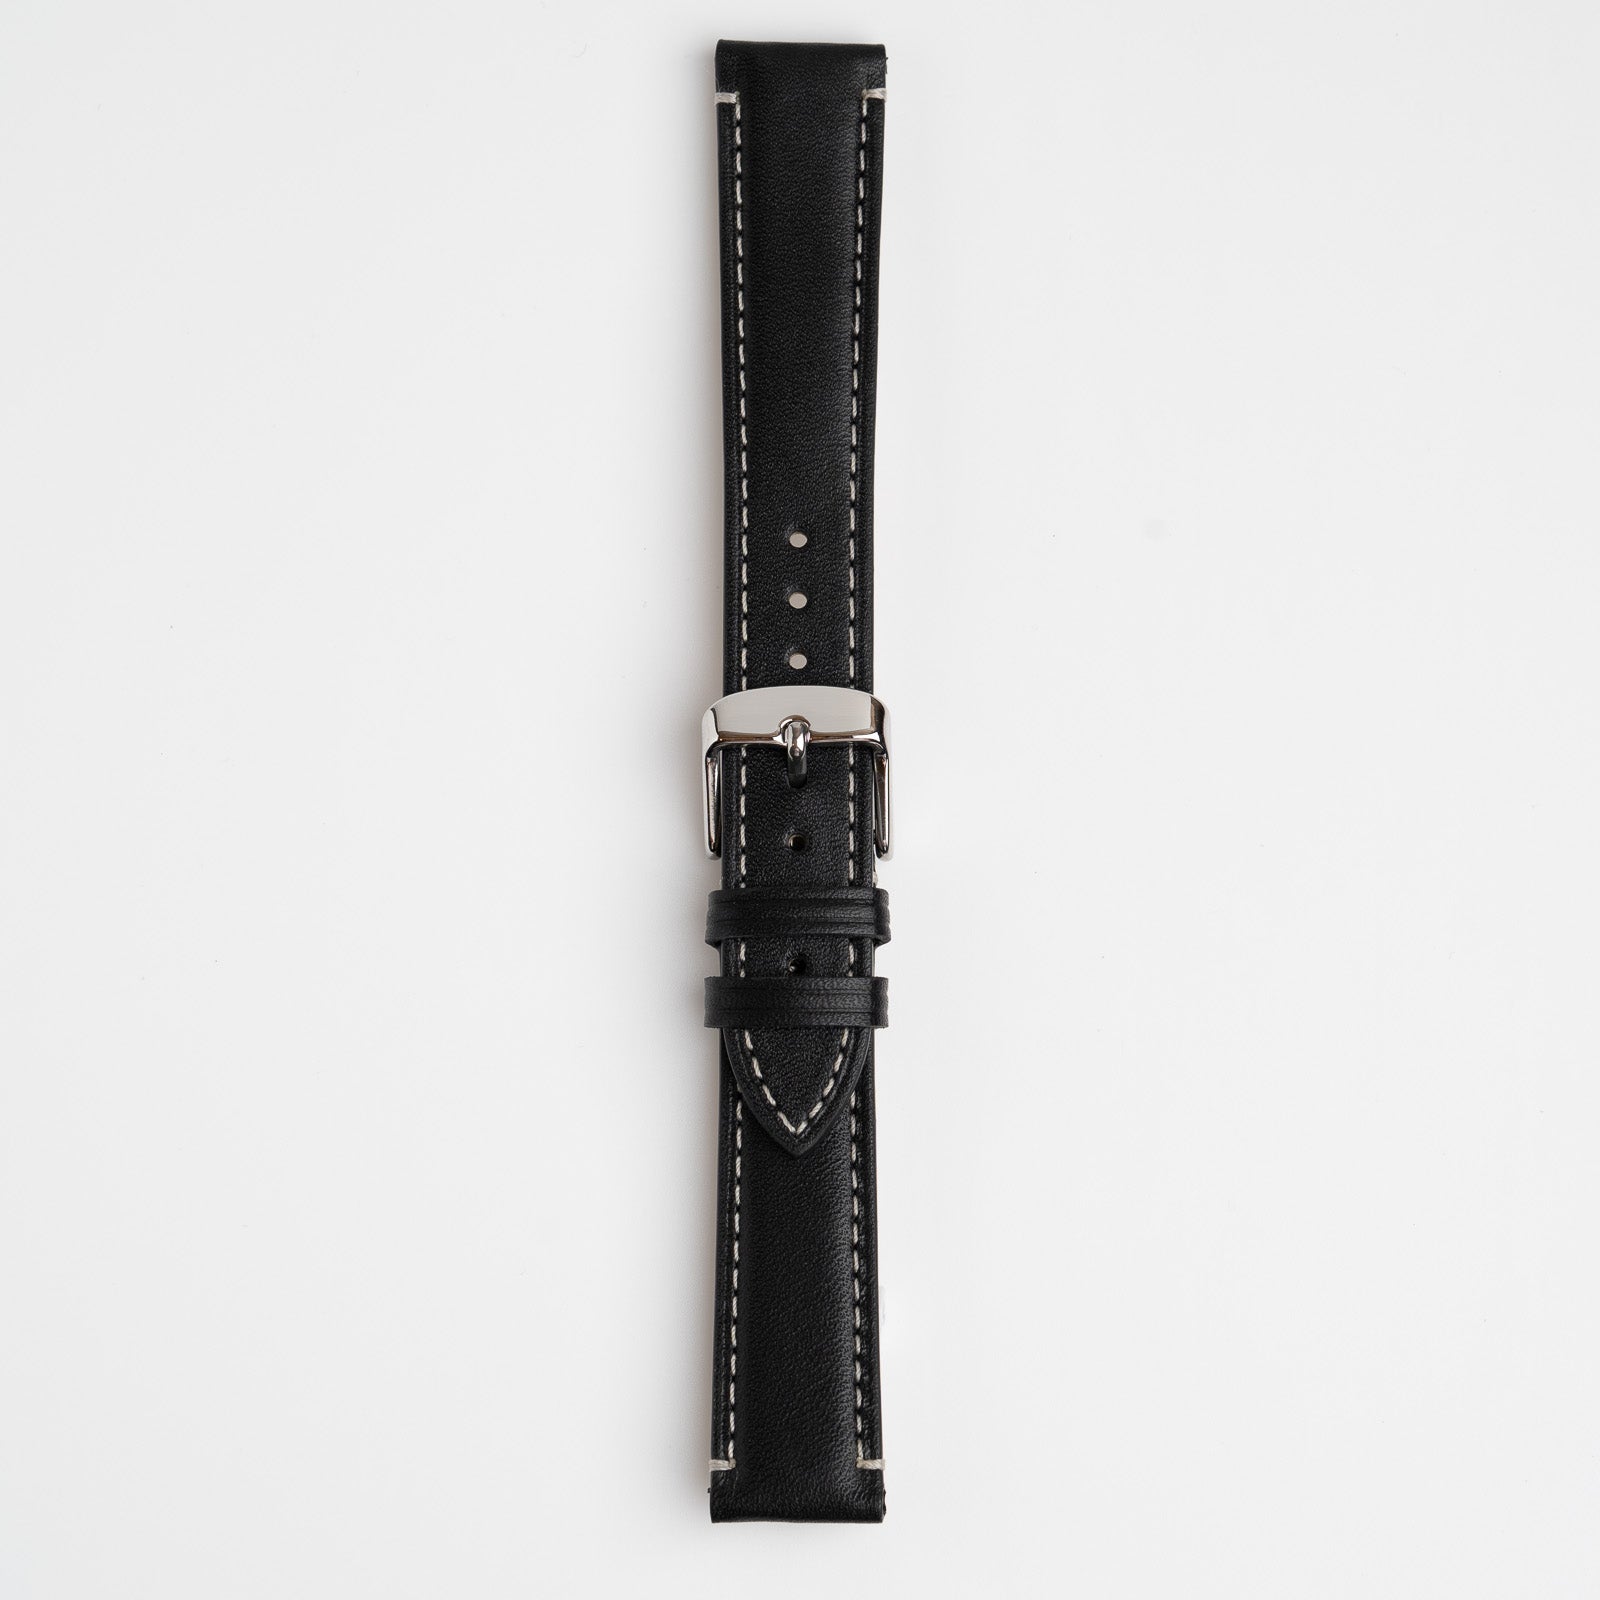 Handmade Contrast Black Watch Strap